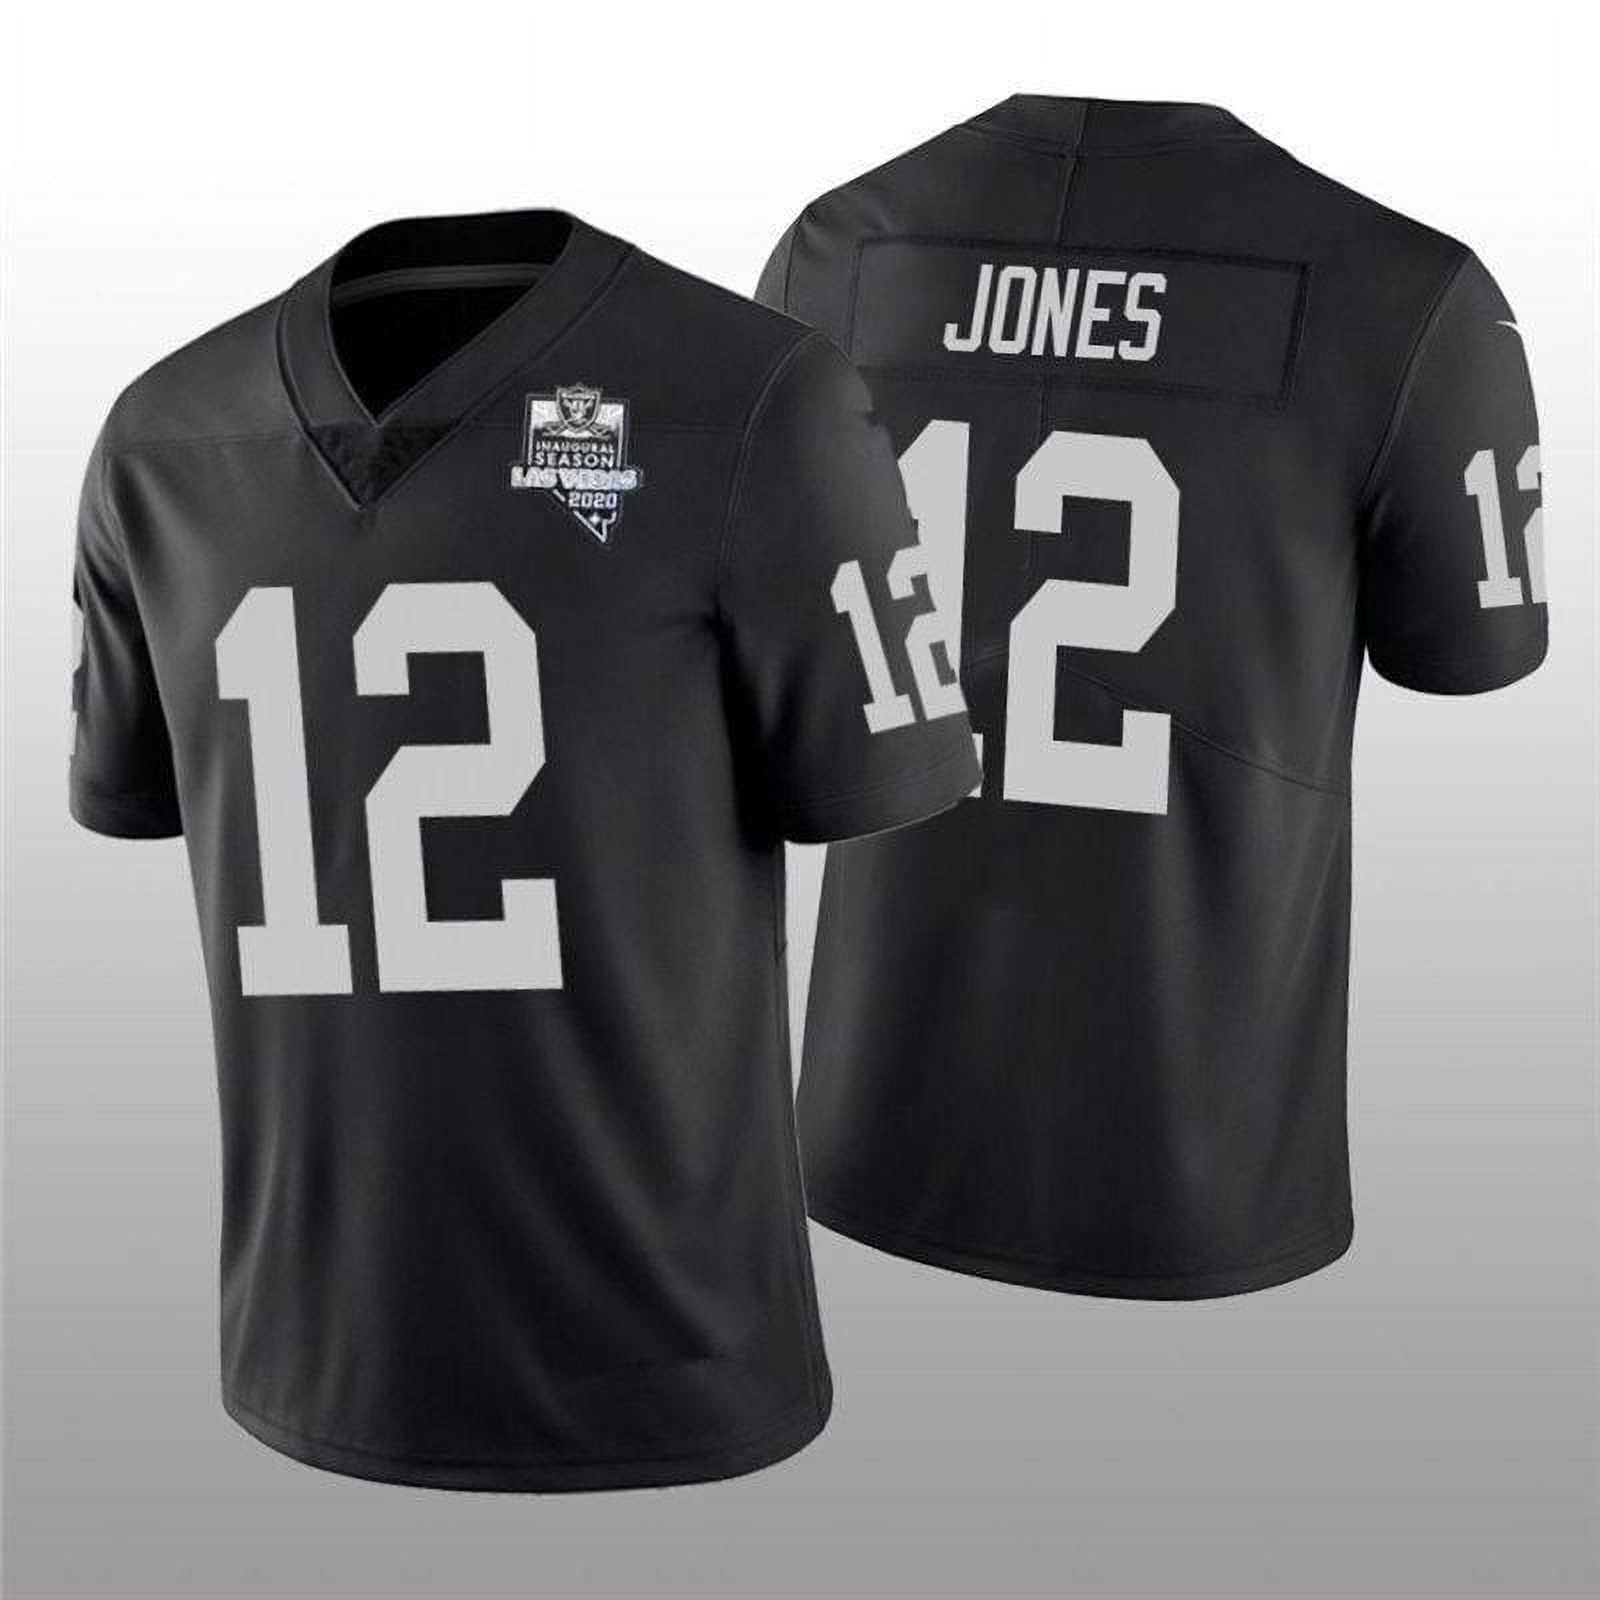 NFL_Jerseys Jersey custom Las Vegas''Raiders''MEN Jackson Black ''nfl 